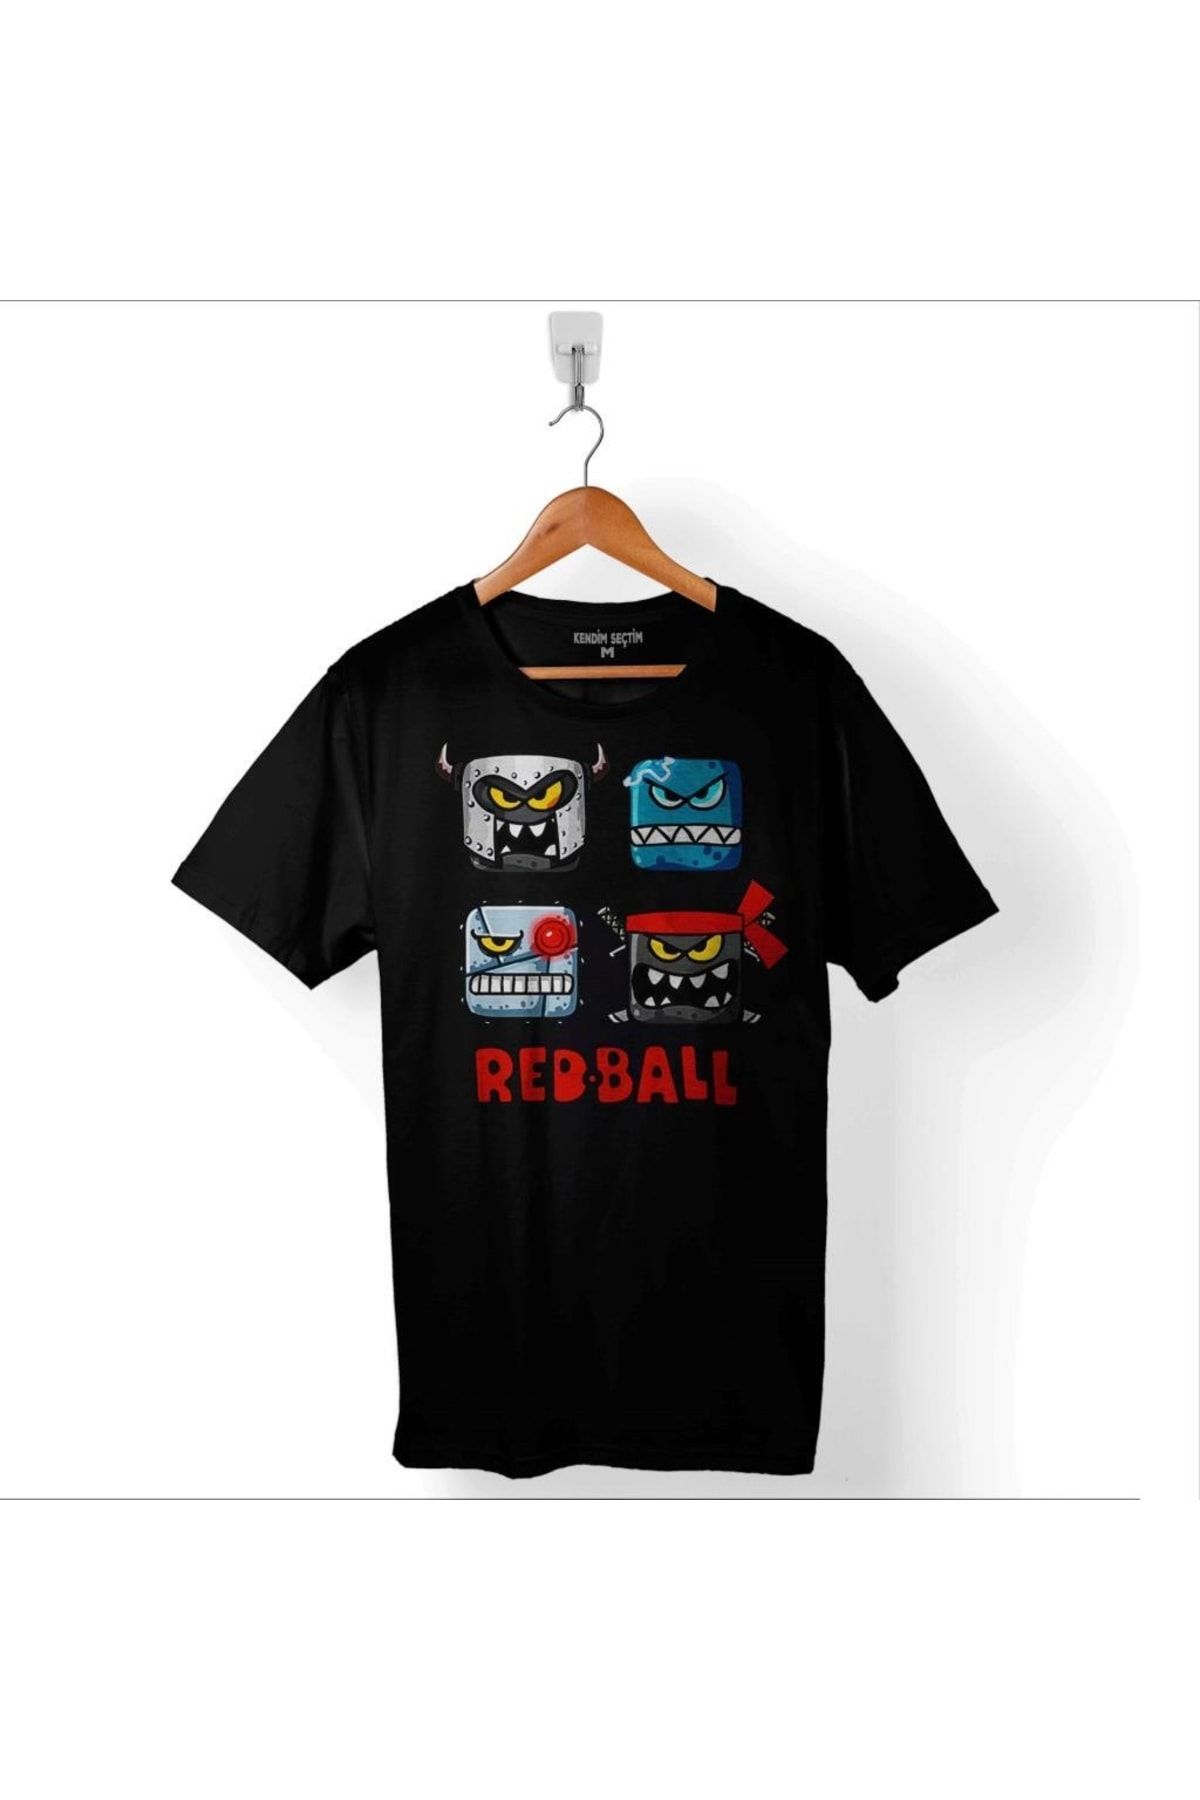 Seçtim Red Ball 4 Crazy Kırmızı Top Redball Erkek Tişört | 54%'YE KADAR İNDİRİM | ashingtoncameraclub.co.uk